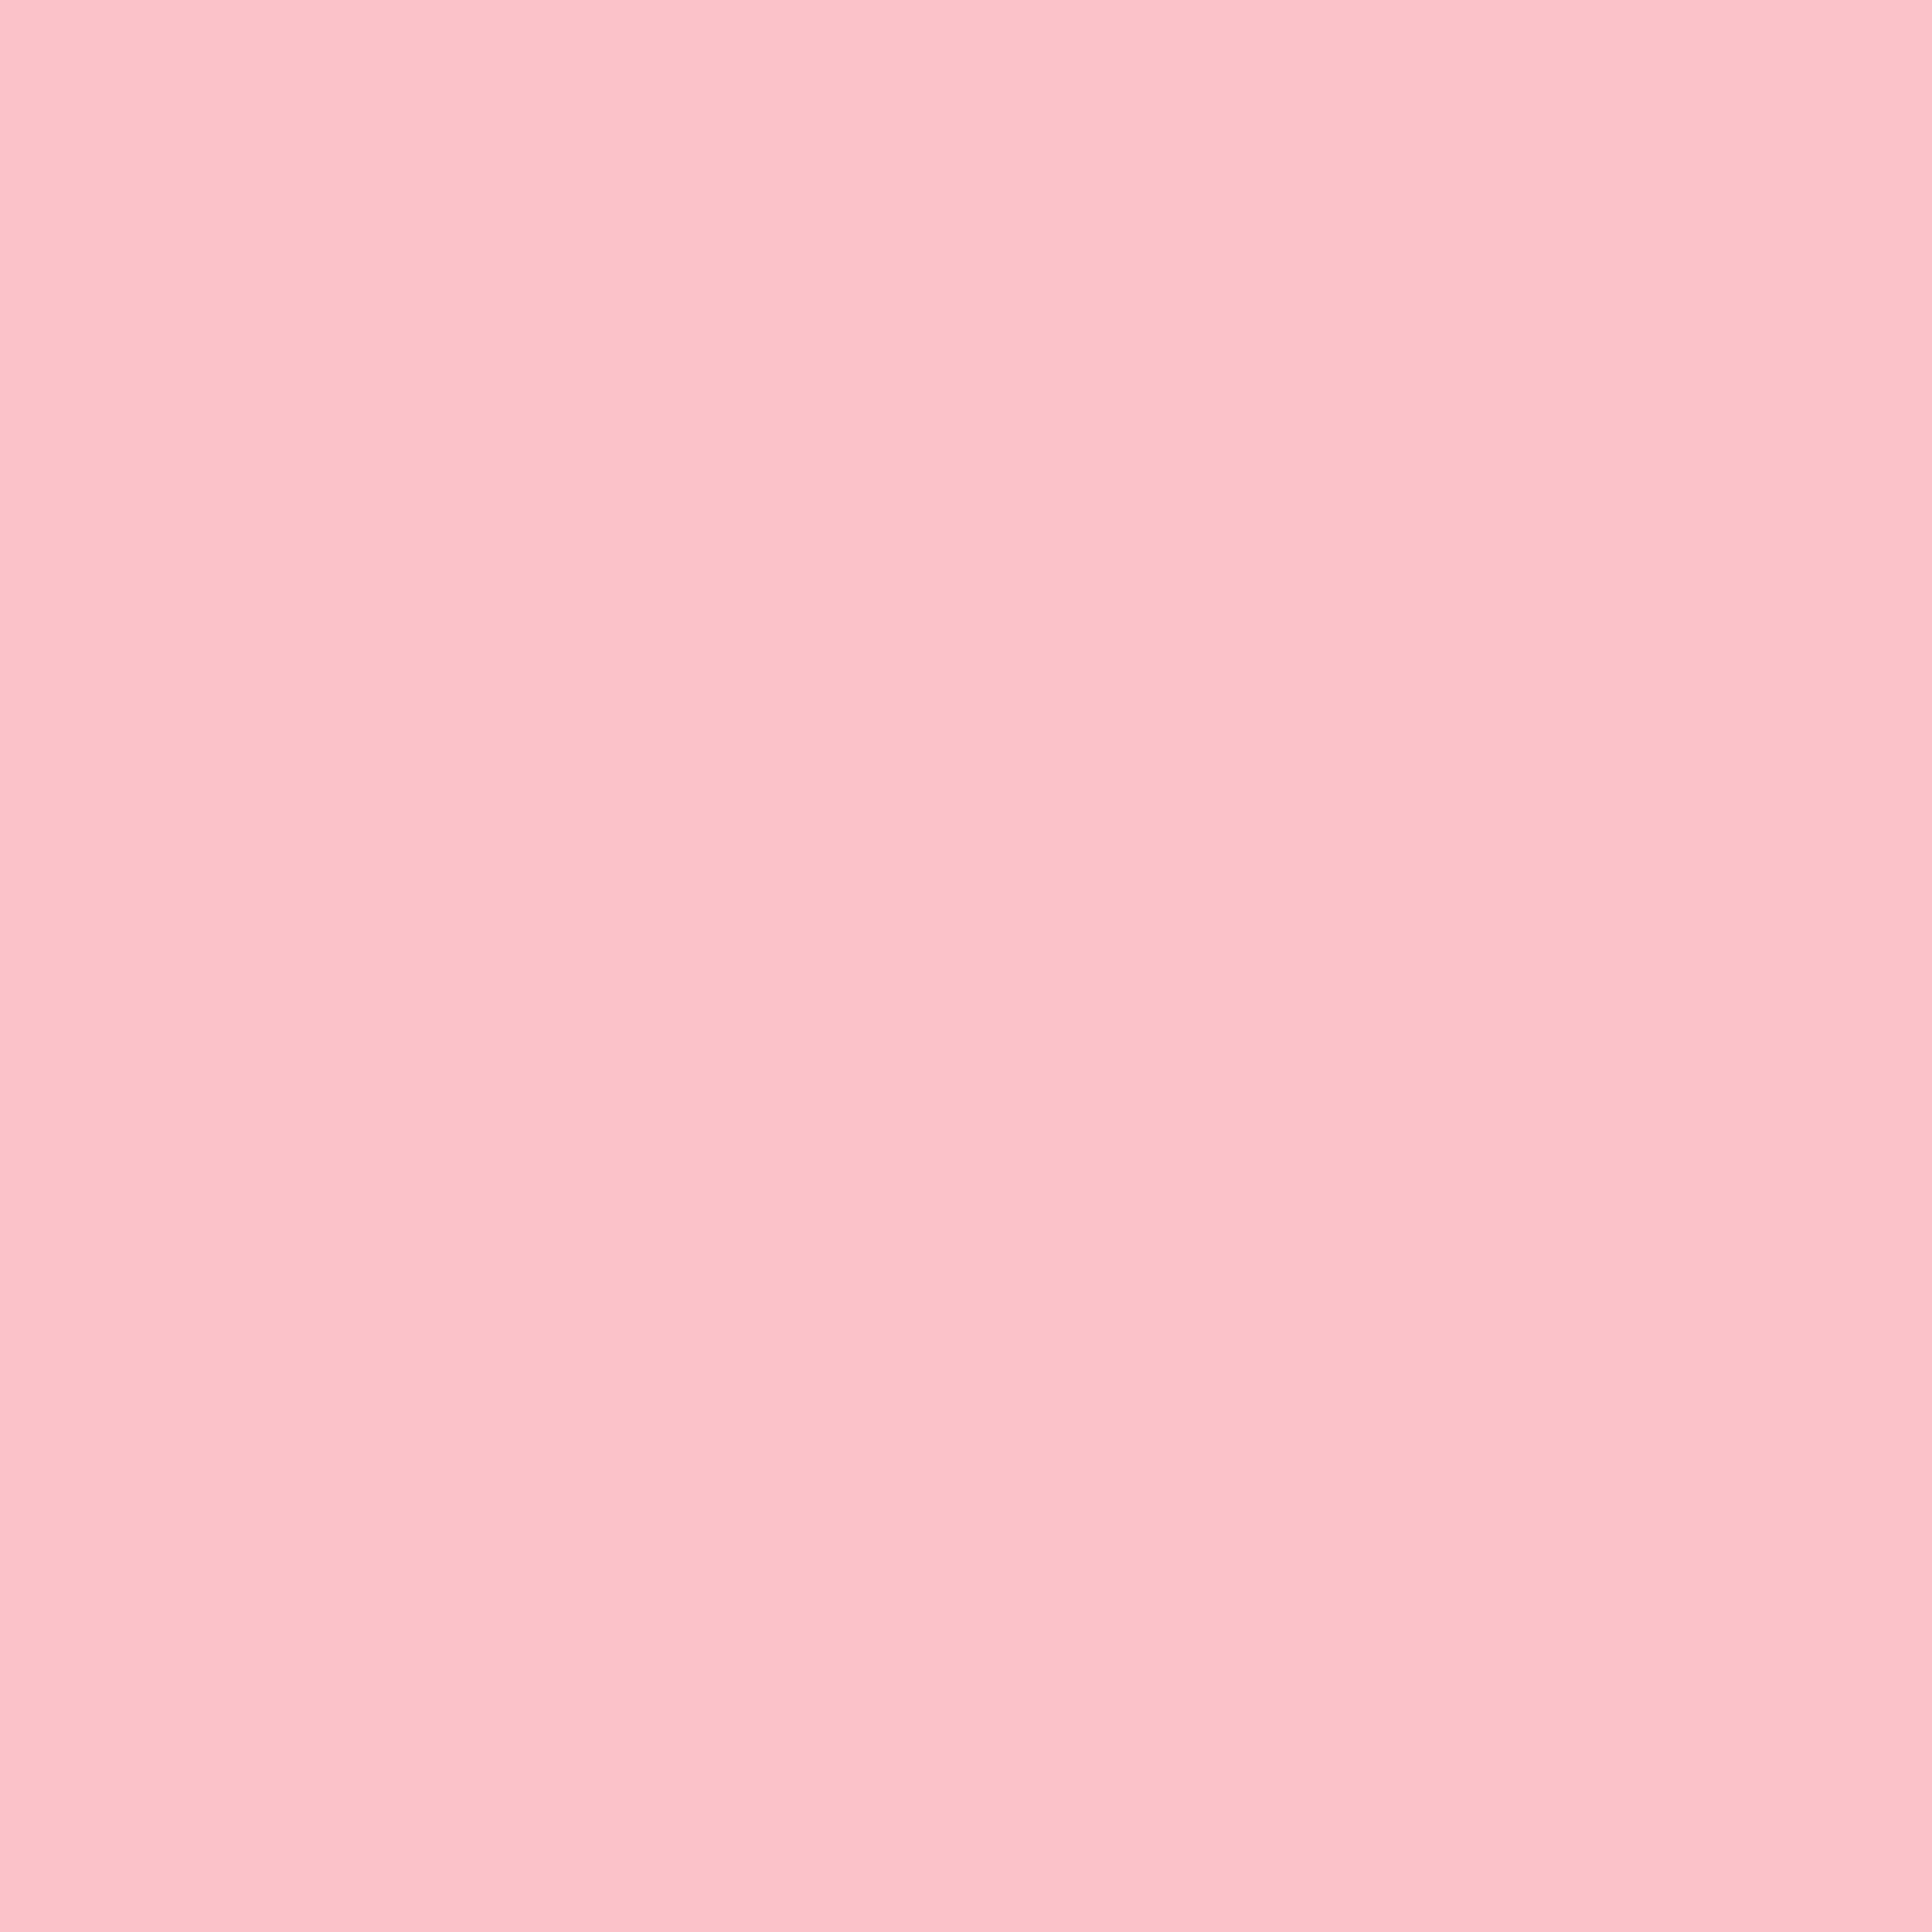 Pink Lemonade Cardstock, Pop-Tone Papers: The Image Shop